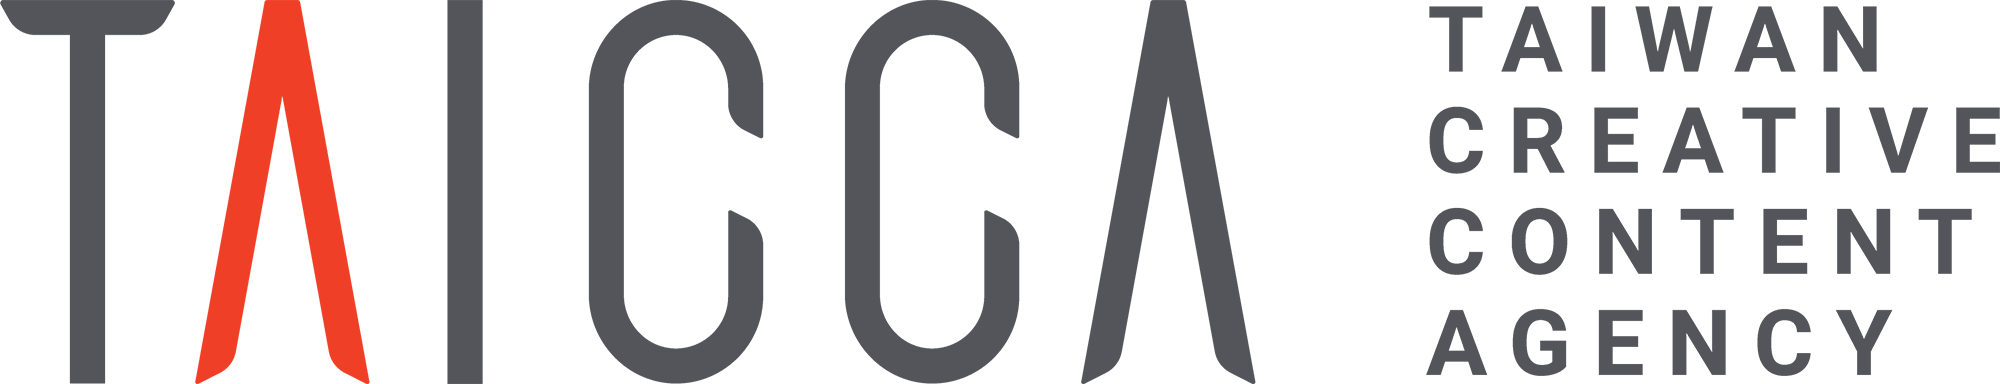 Logo de la société TAICCA 19174